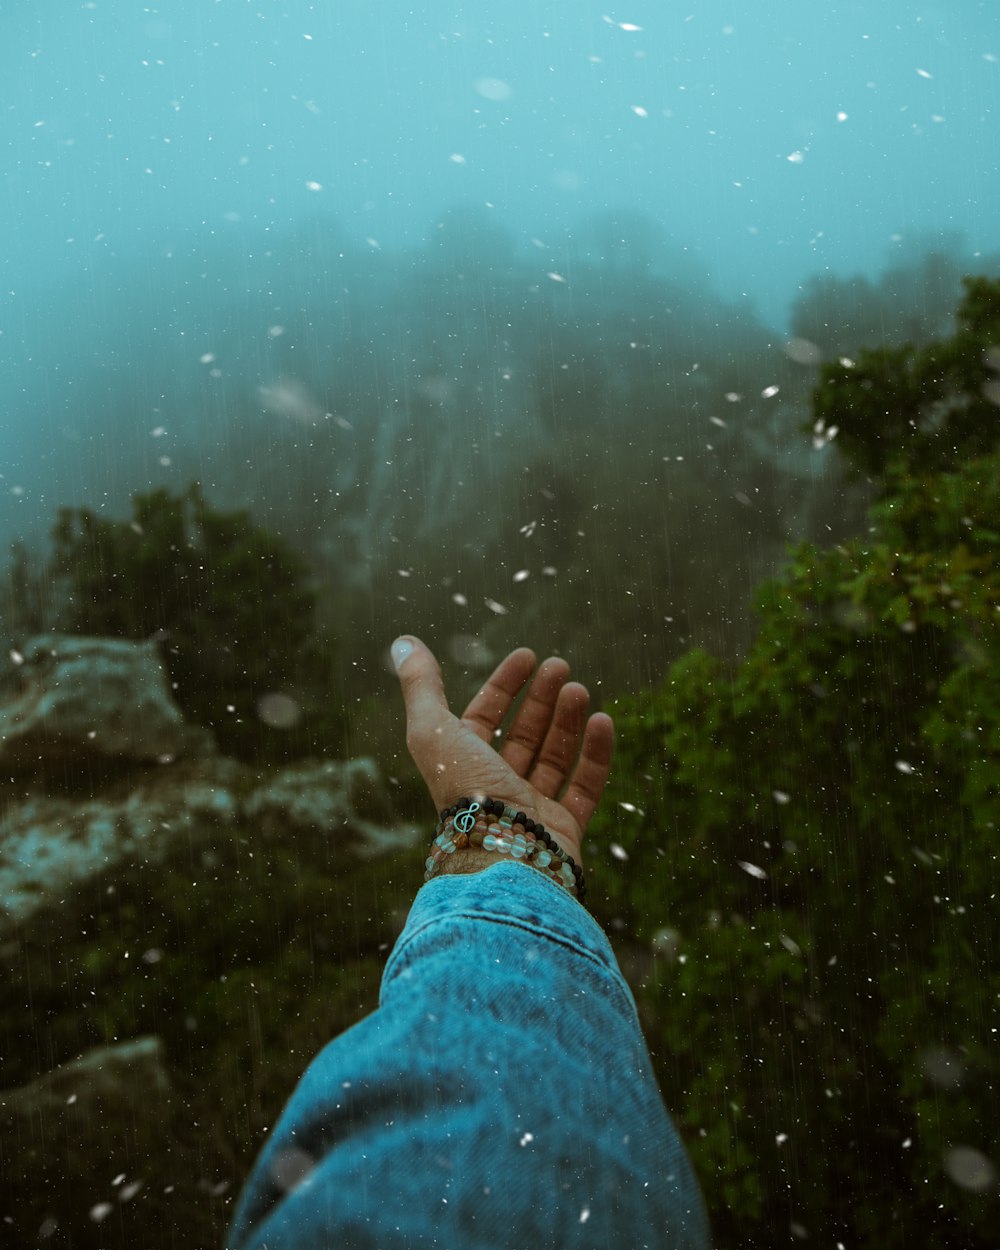 a person's hand in the rain